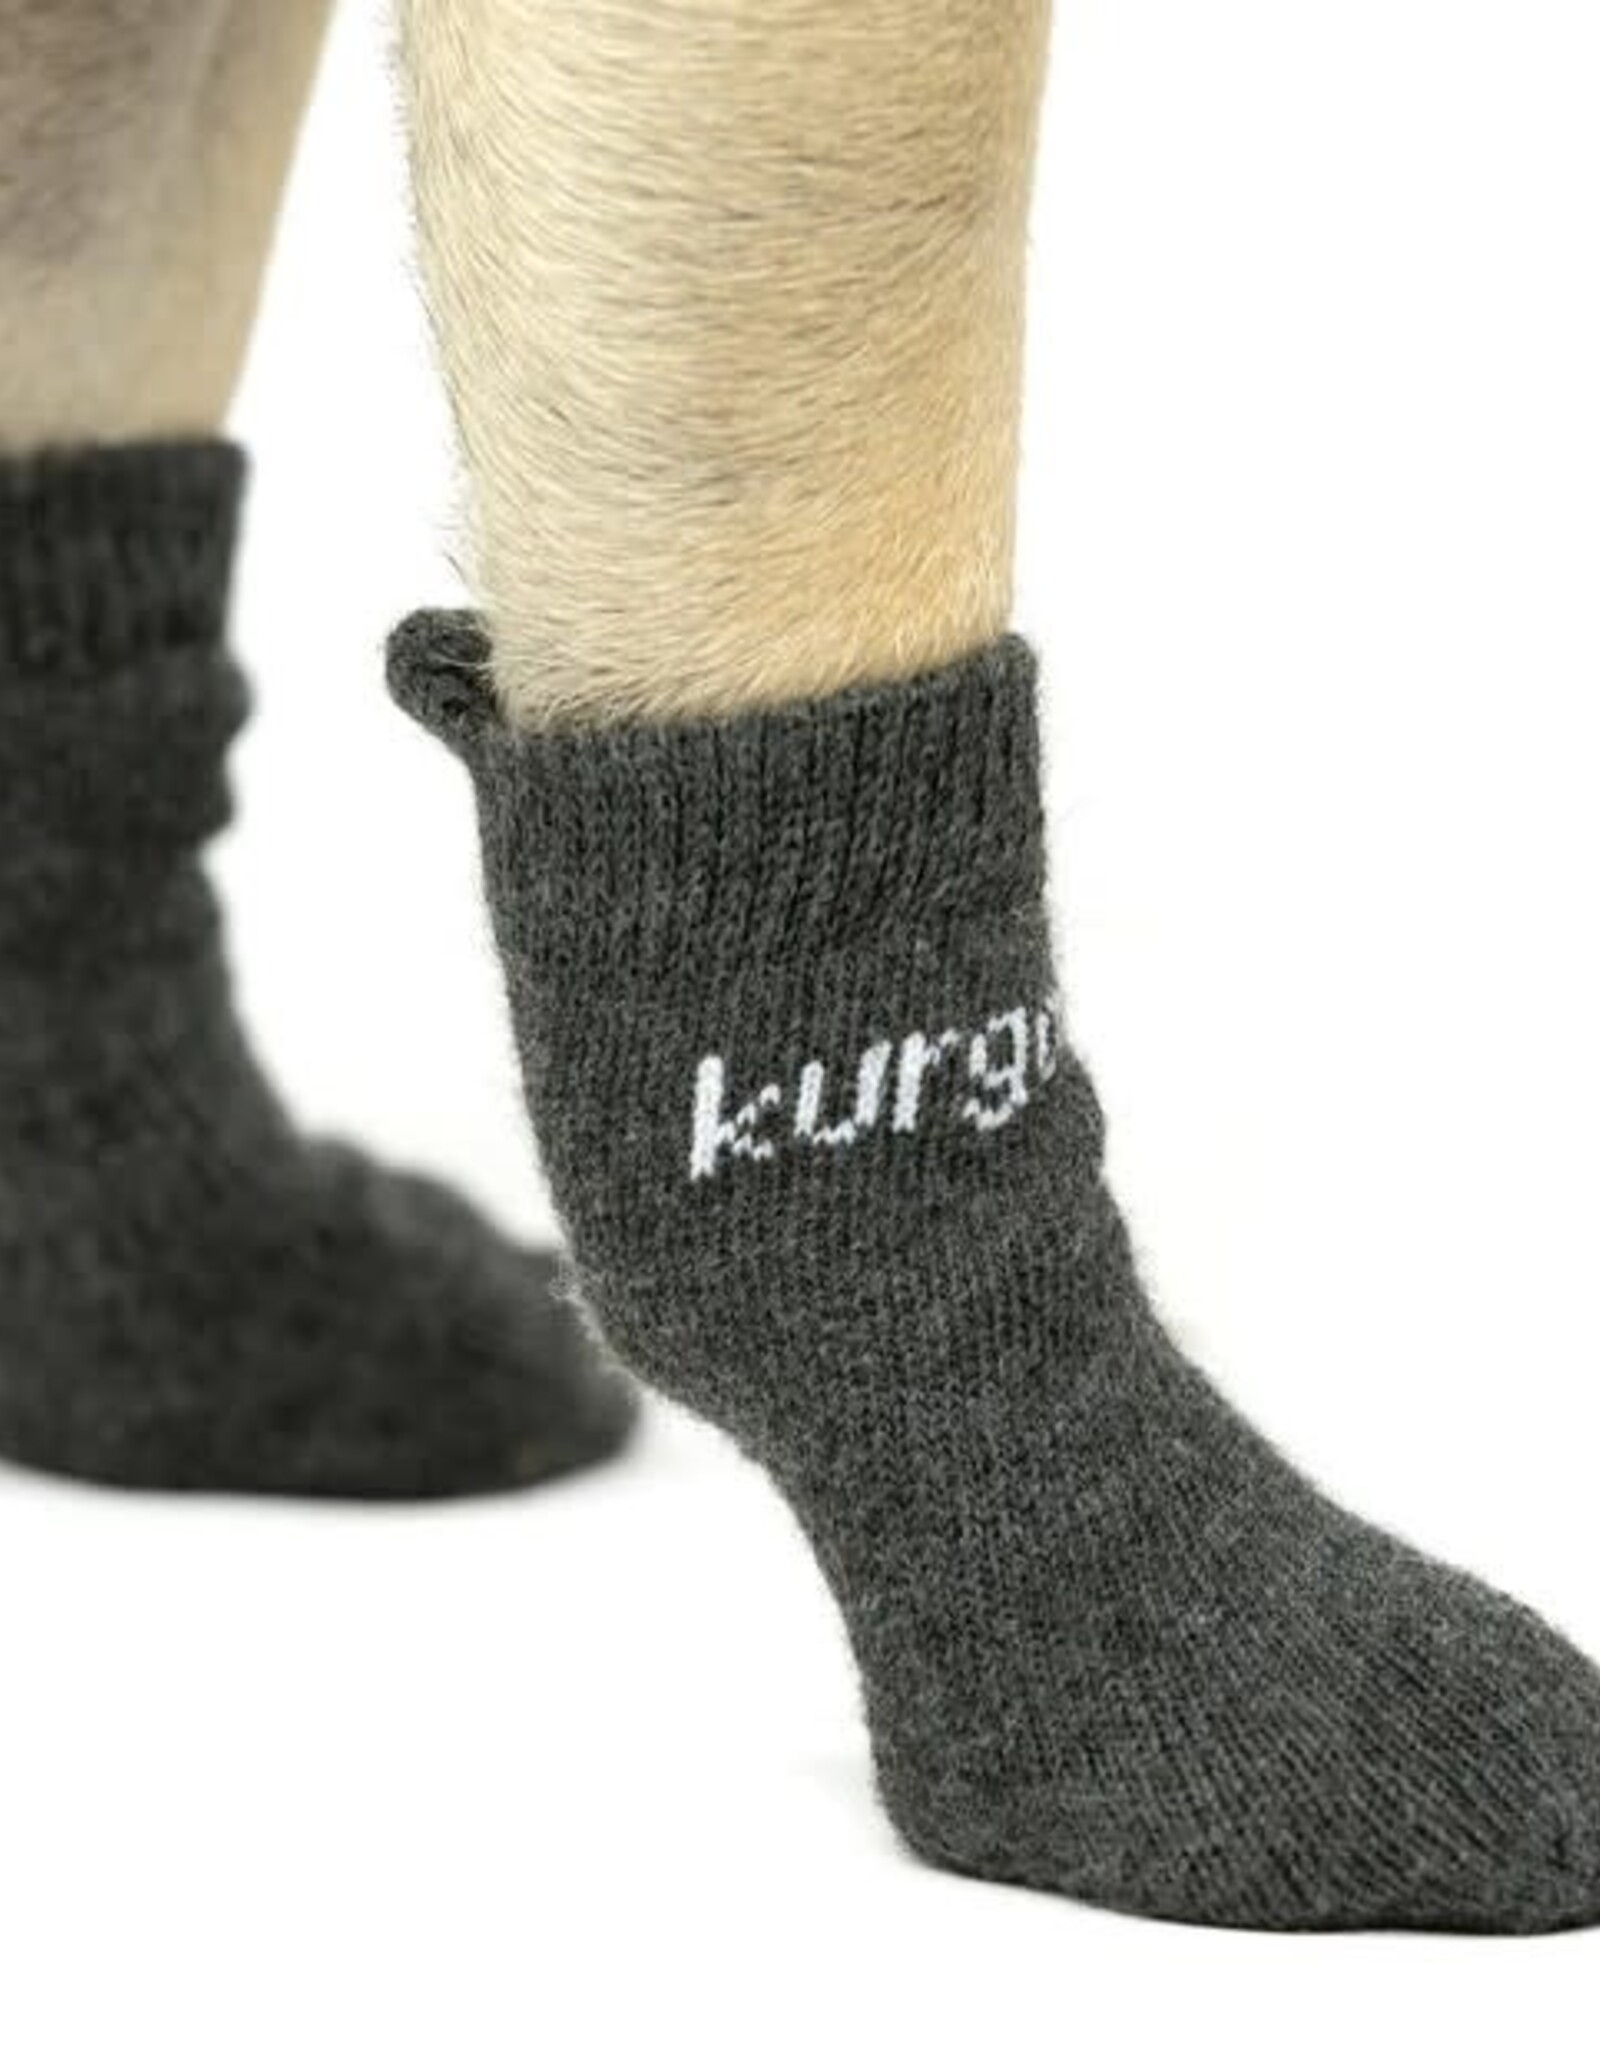 RADIO SYSTEMS CORP(PET SAFE) Kurgo Blaze Dog Socks Small